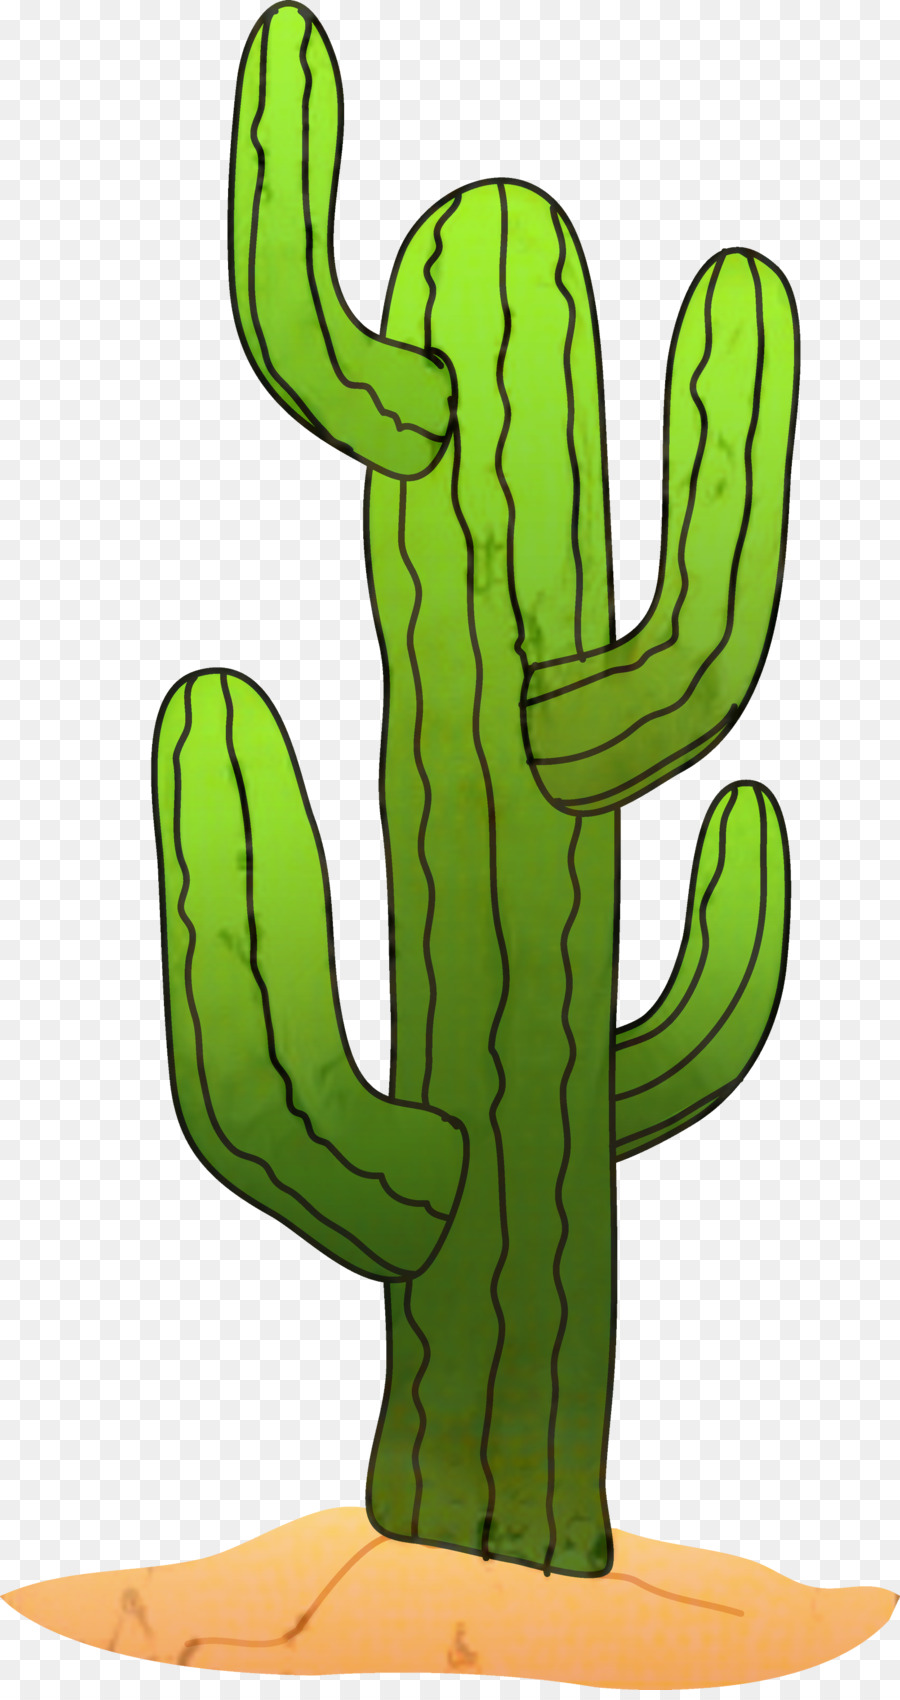 Cactus Clip art Saguaro Portable Network Graphics Image -  png download - 1598*3000 - Free Transparent Cactus png Download.